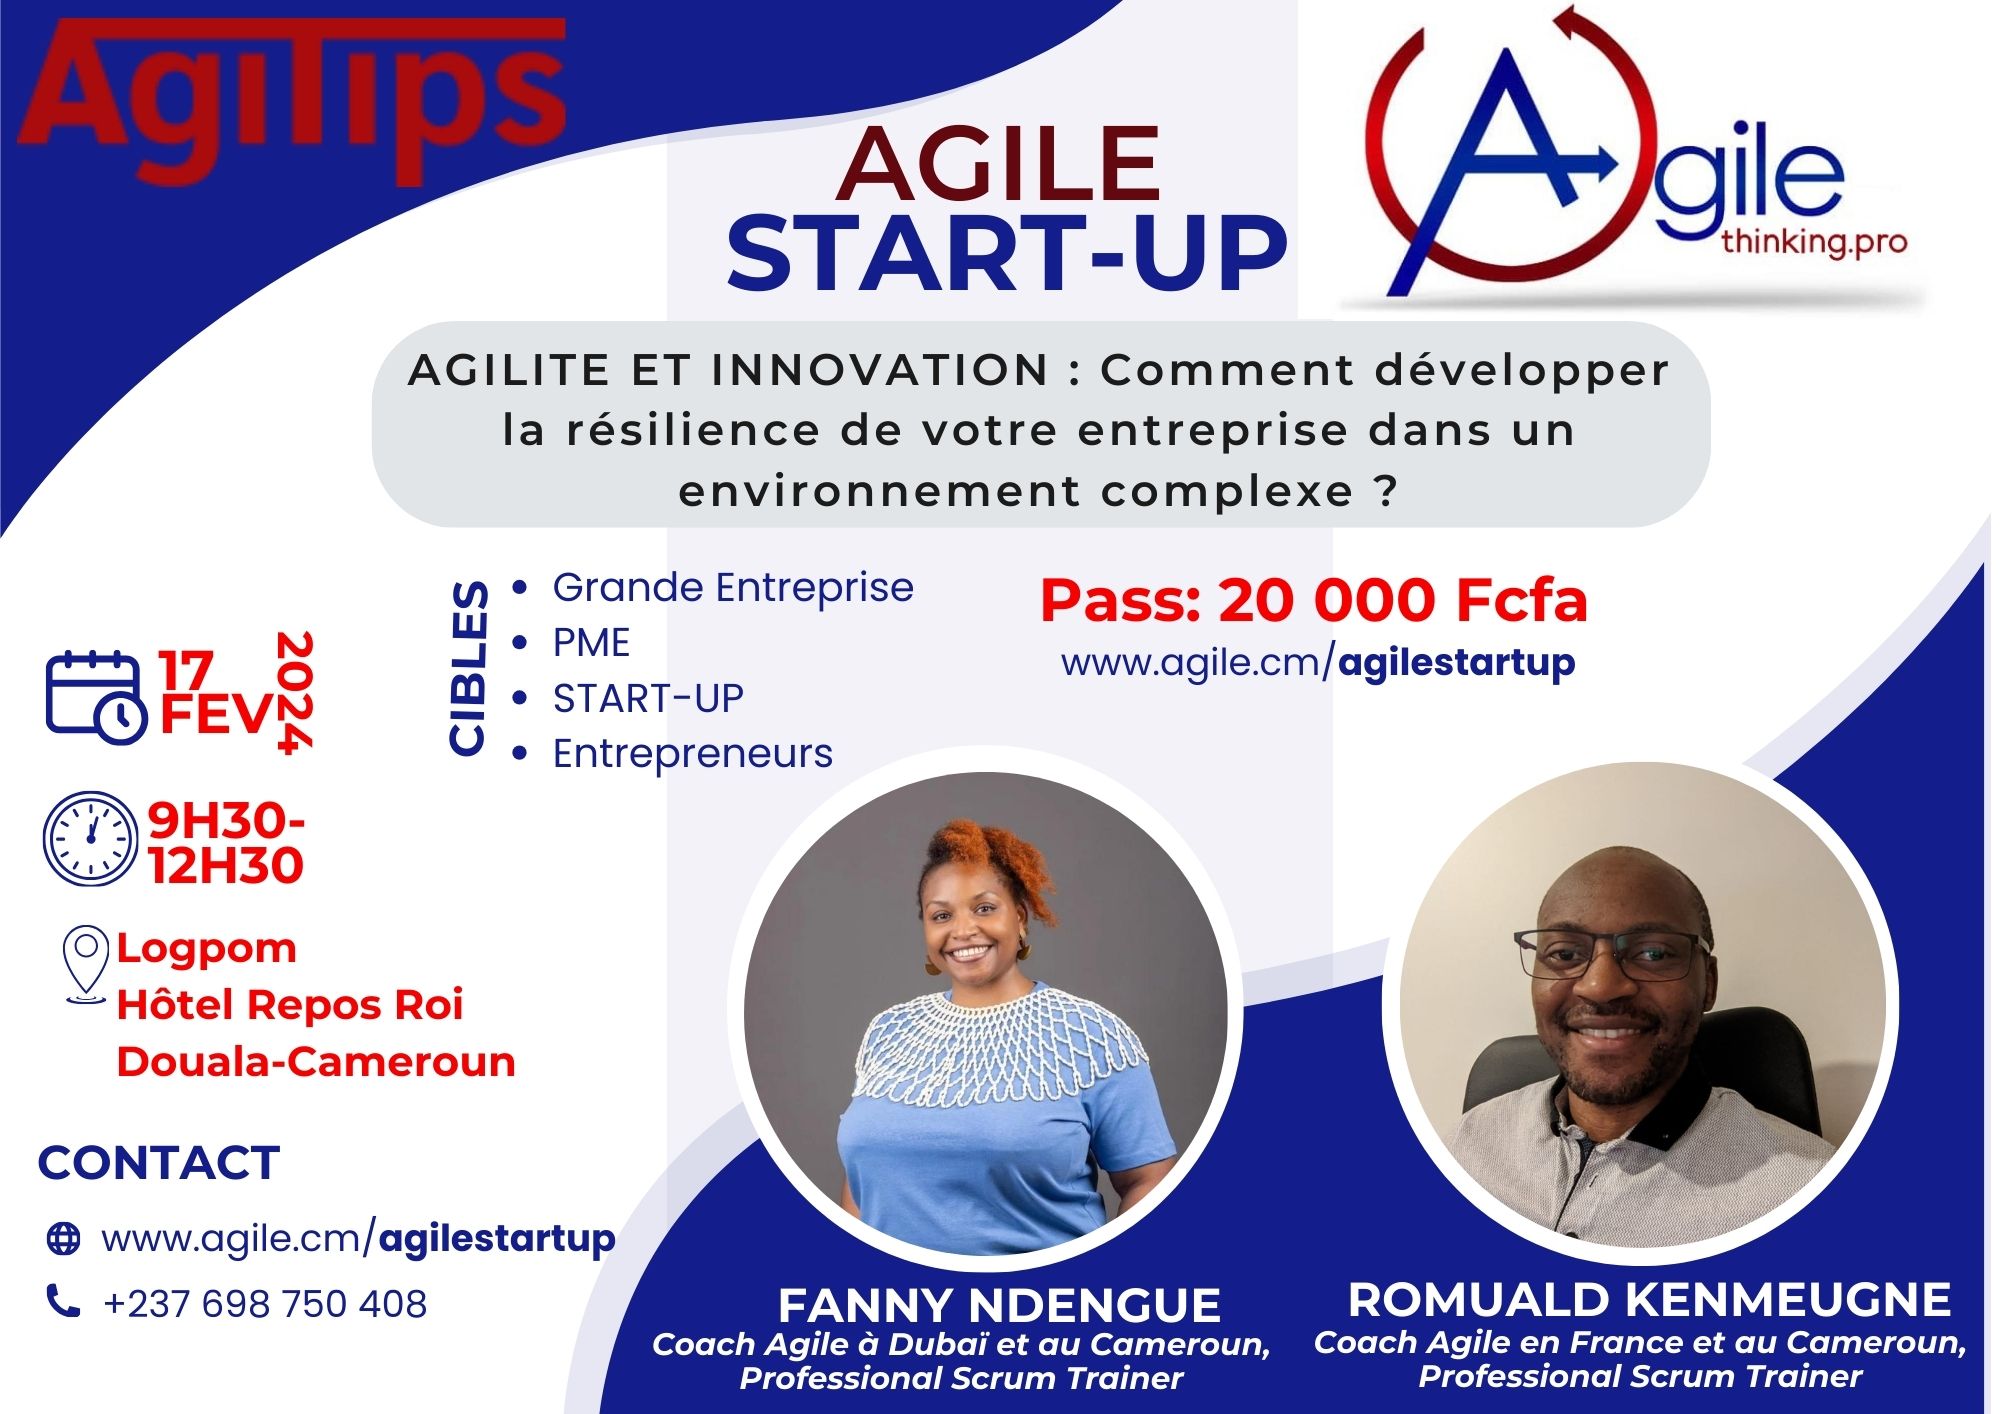 Agile Start-up